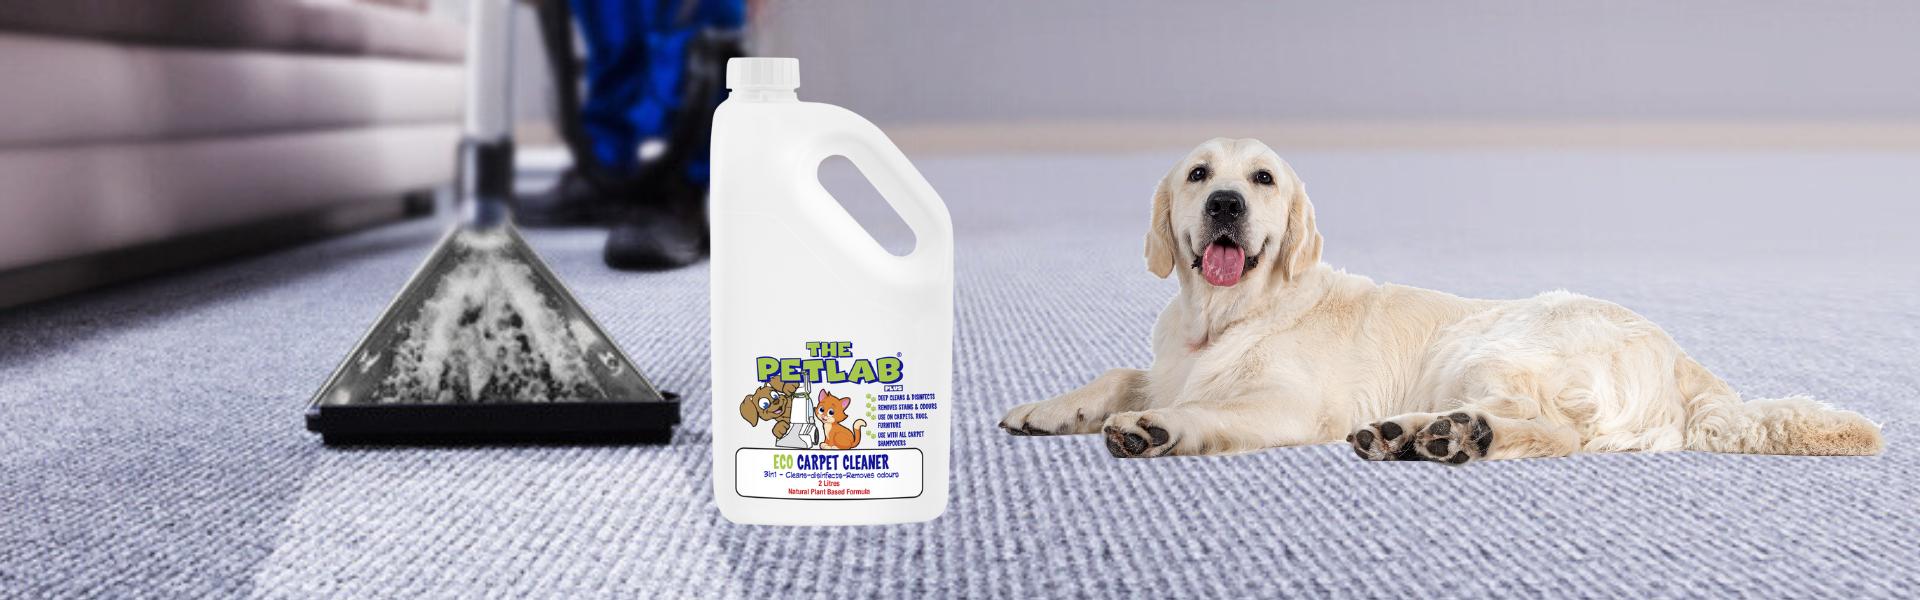 Carpet care: How to remove pet stains using carpet shampoo